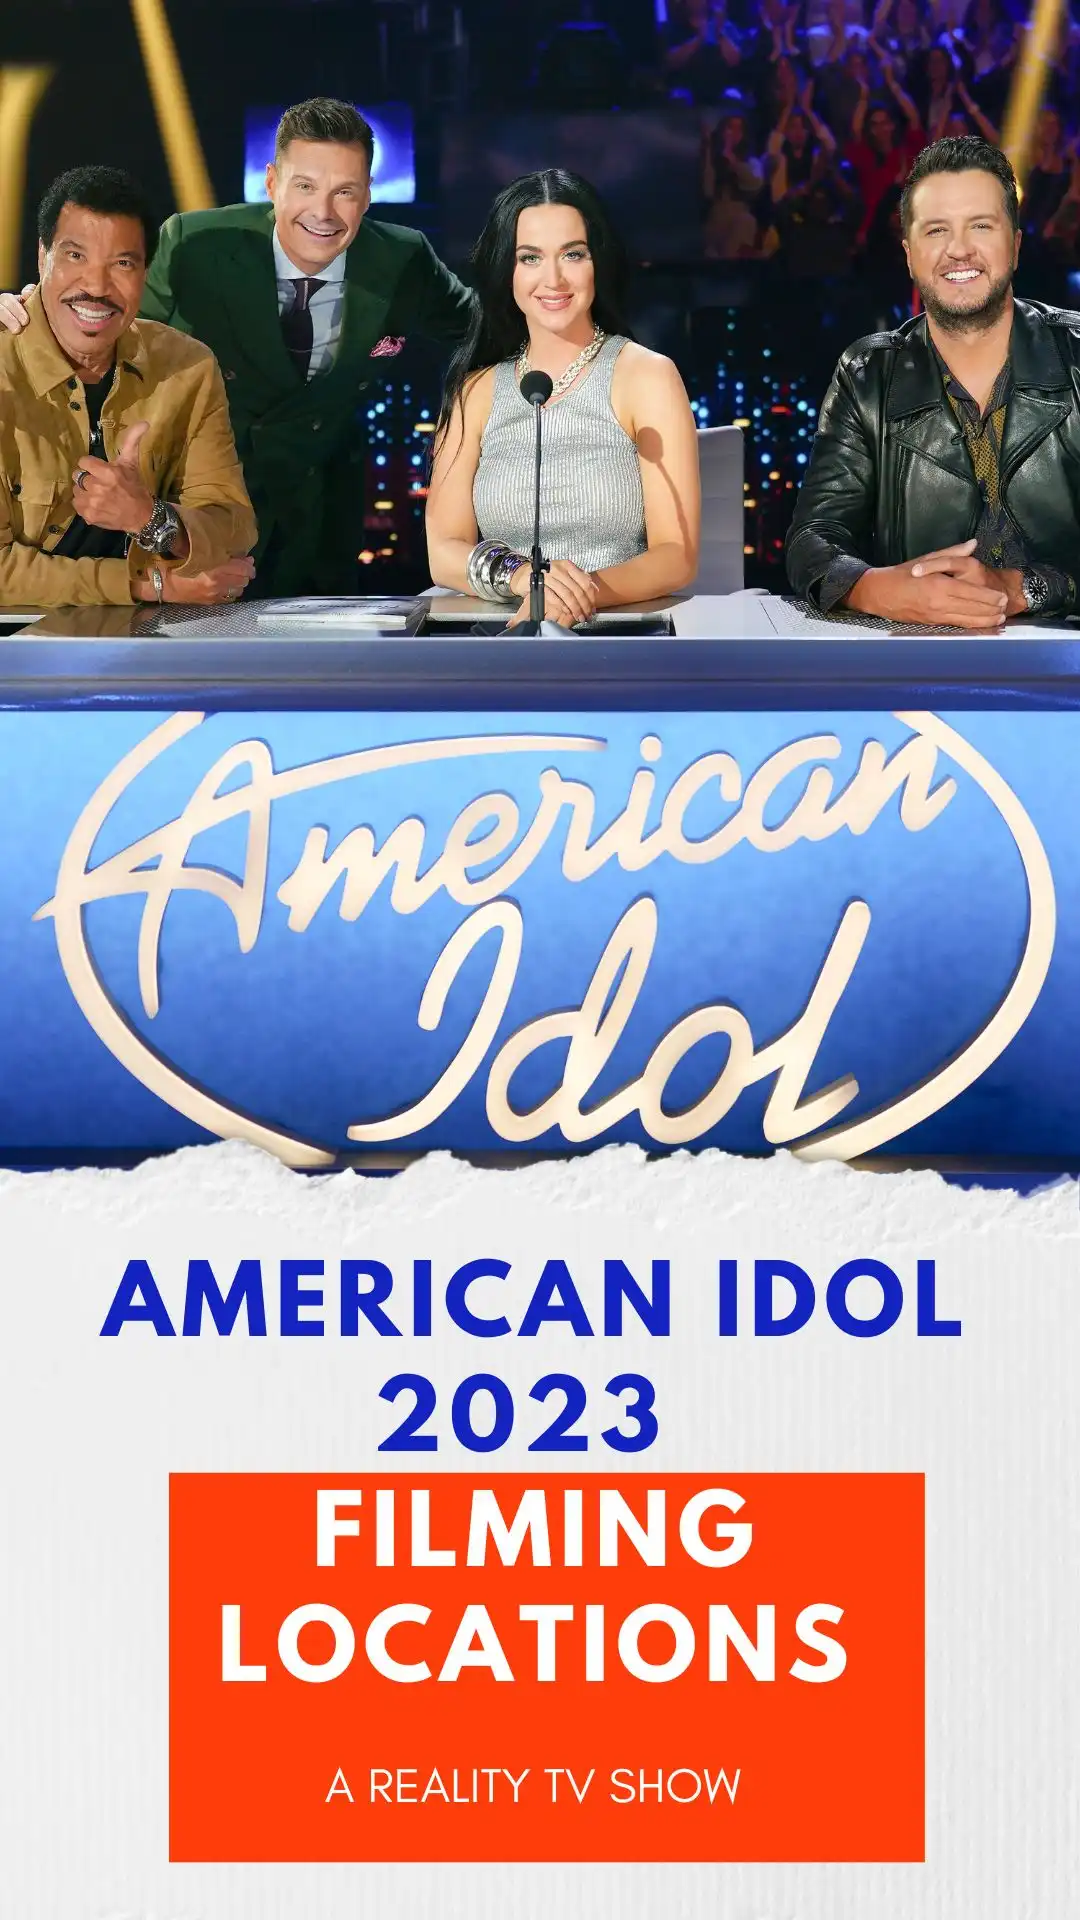 American Idol 2023 Filming Locations